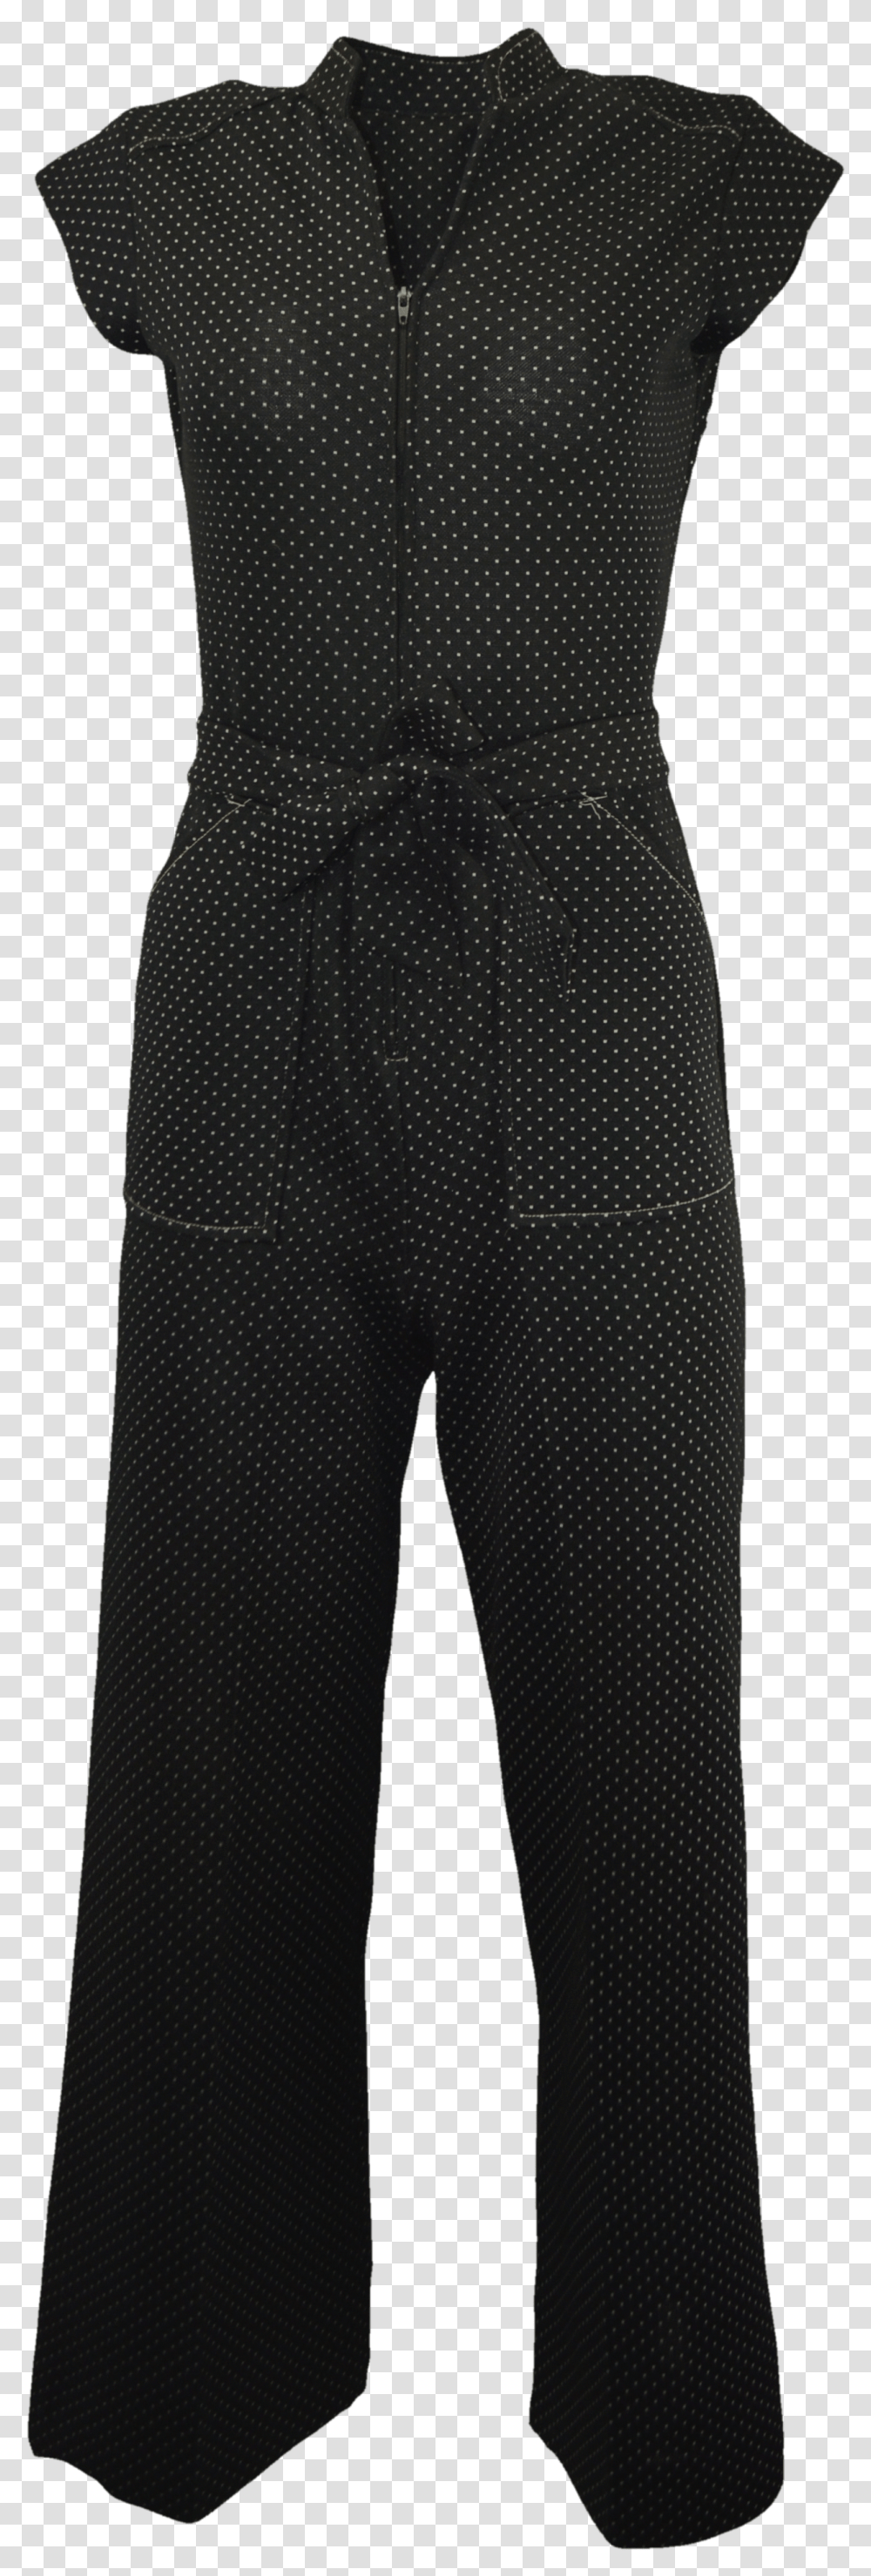 Polka Dot, Pants, Apparel, Shorts Transparent Png